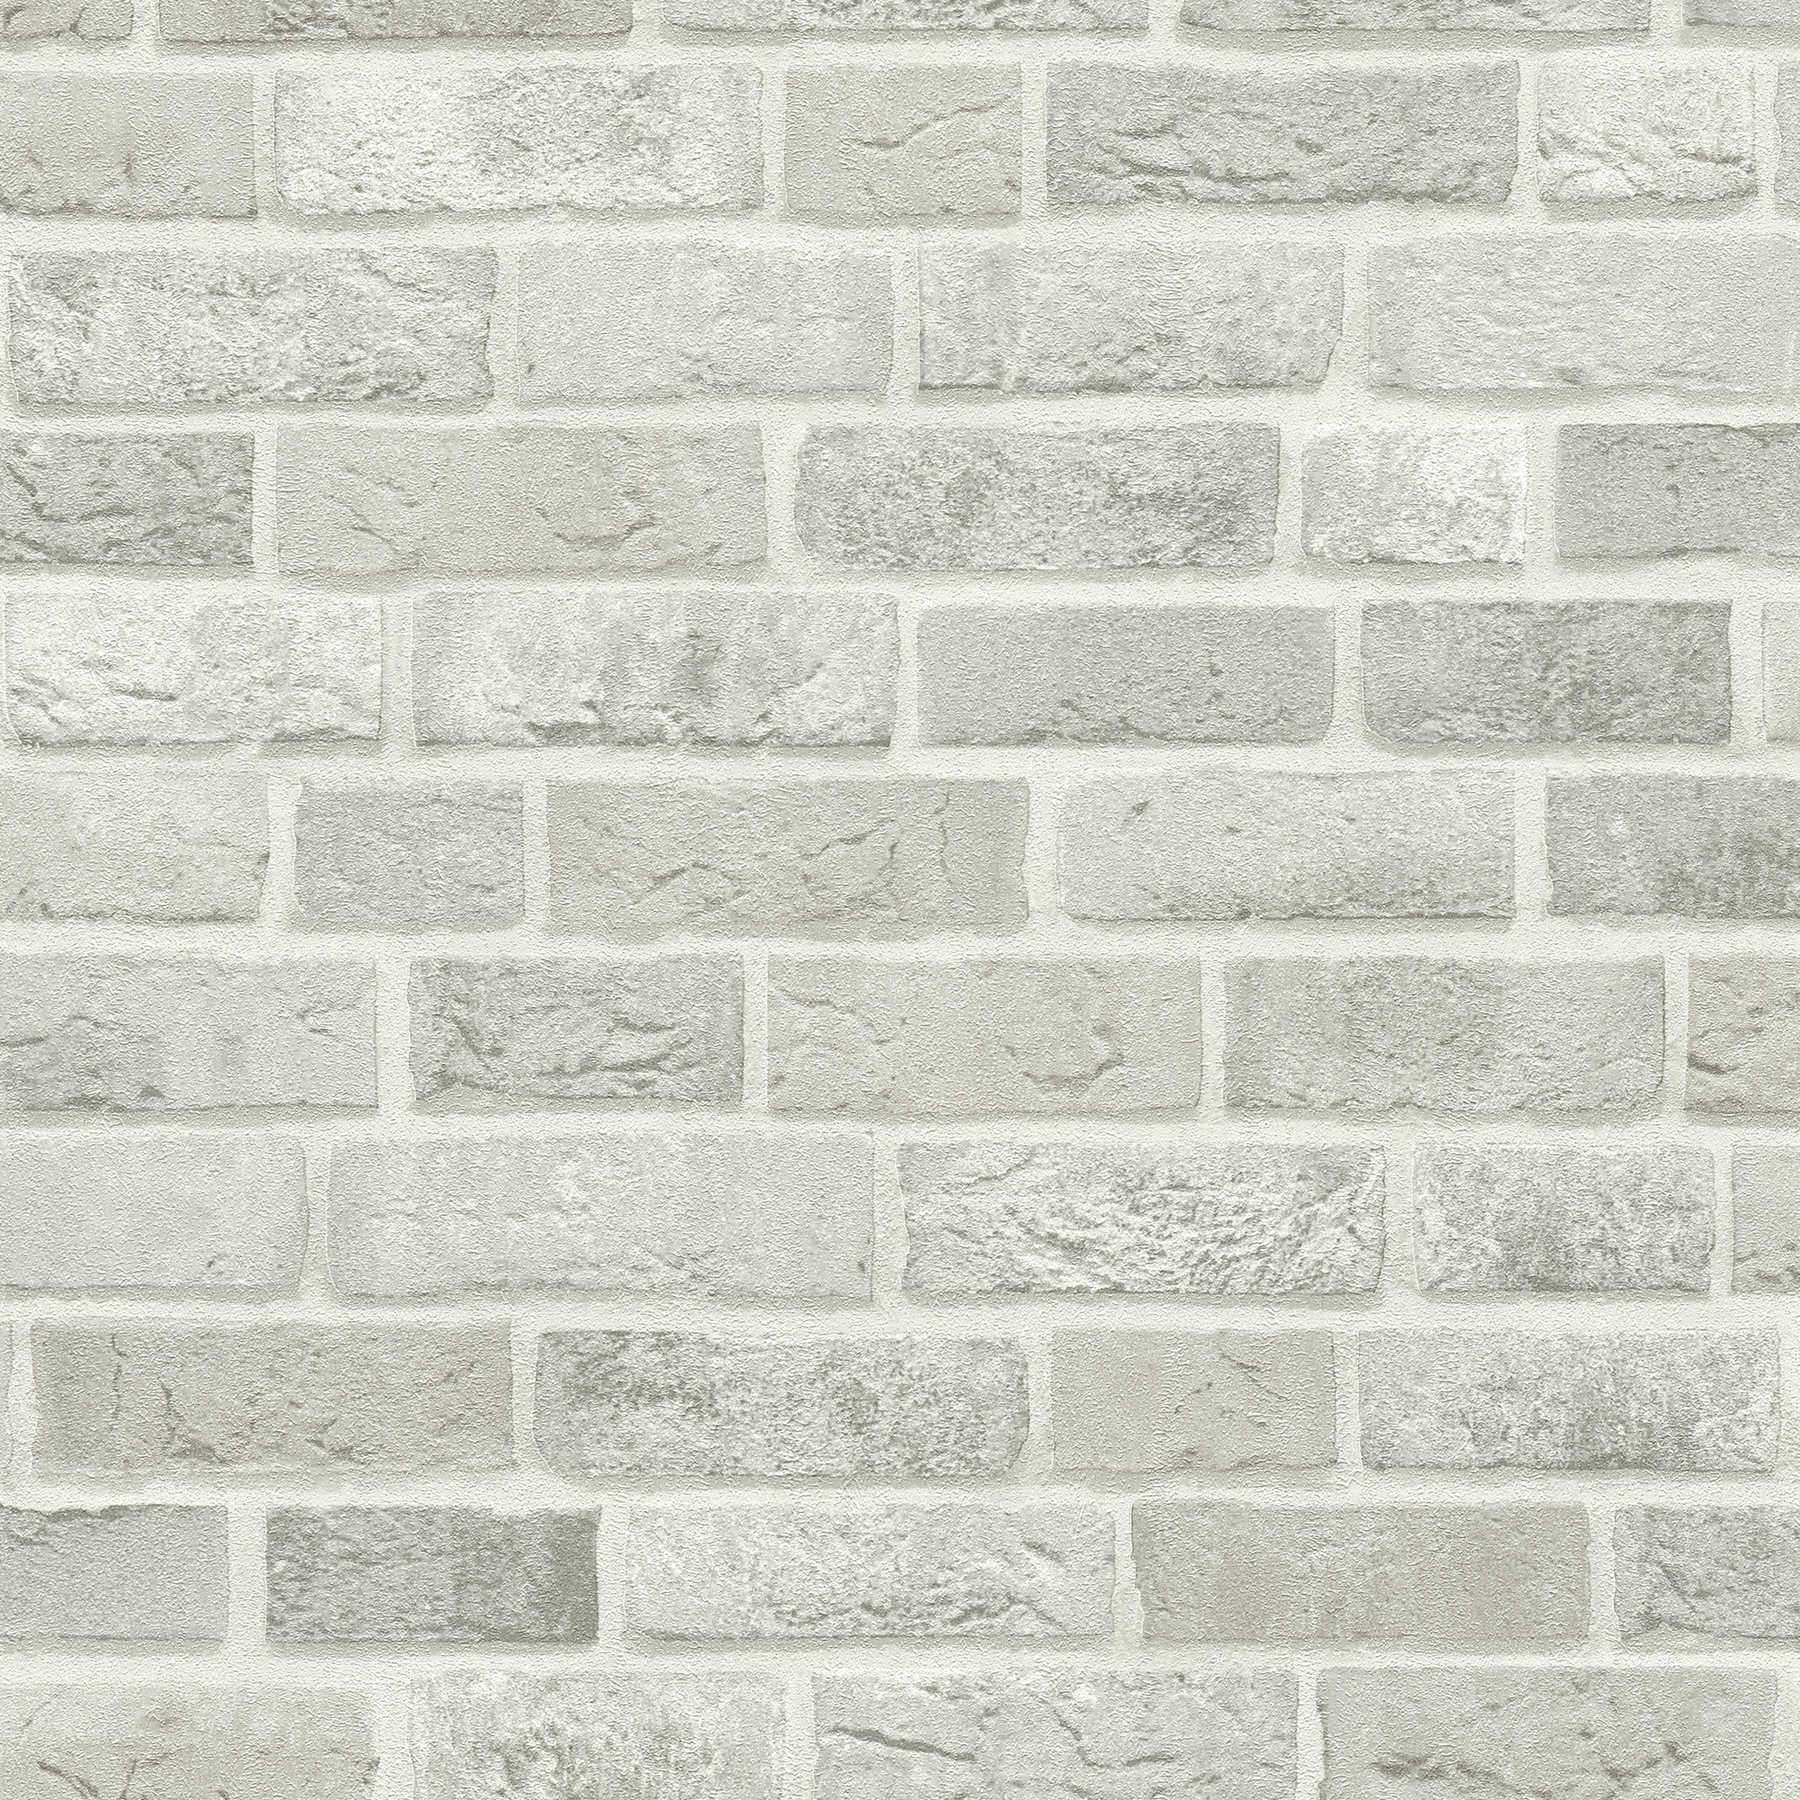         Wallpaper brick wall design 3D stone look - grey, white
    